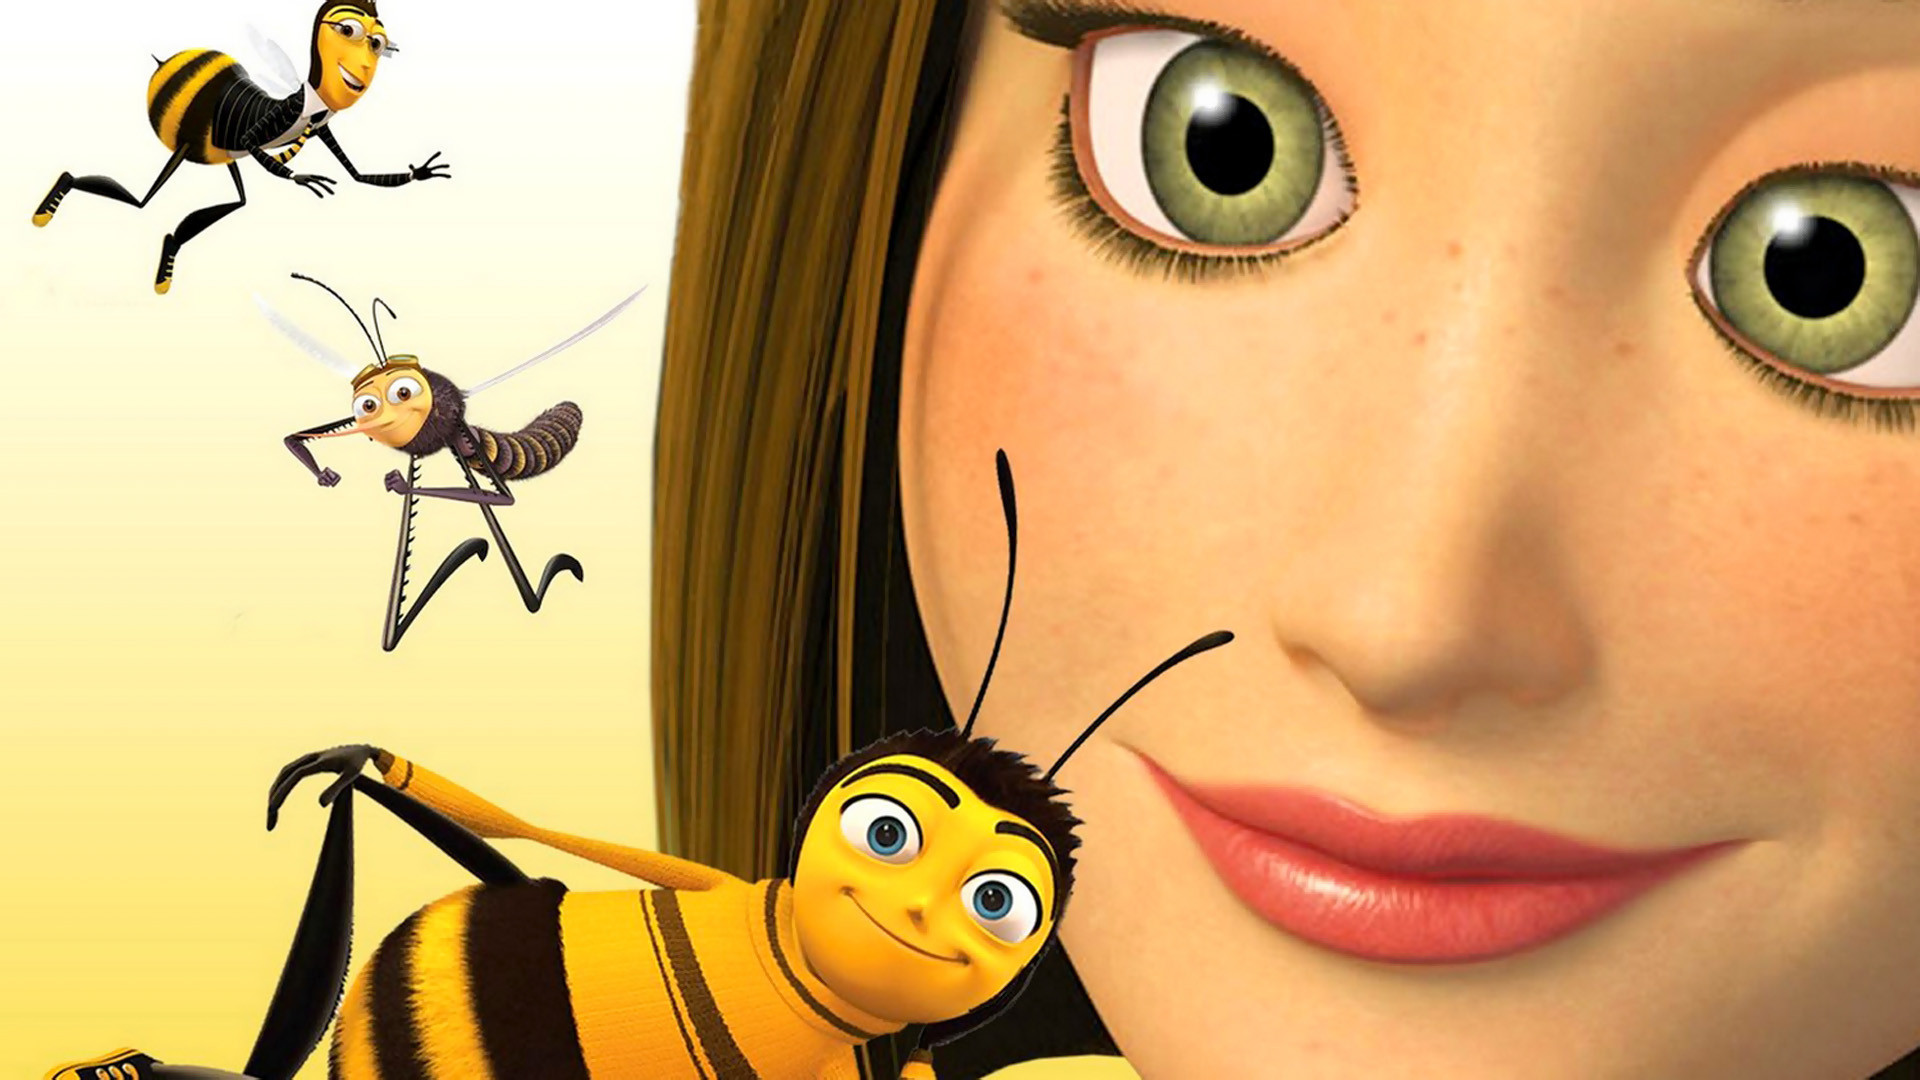 Movie Bee Movie HD Wallpaper